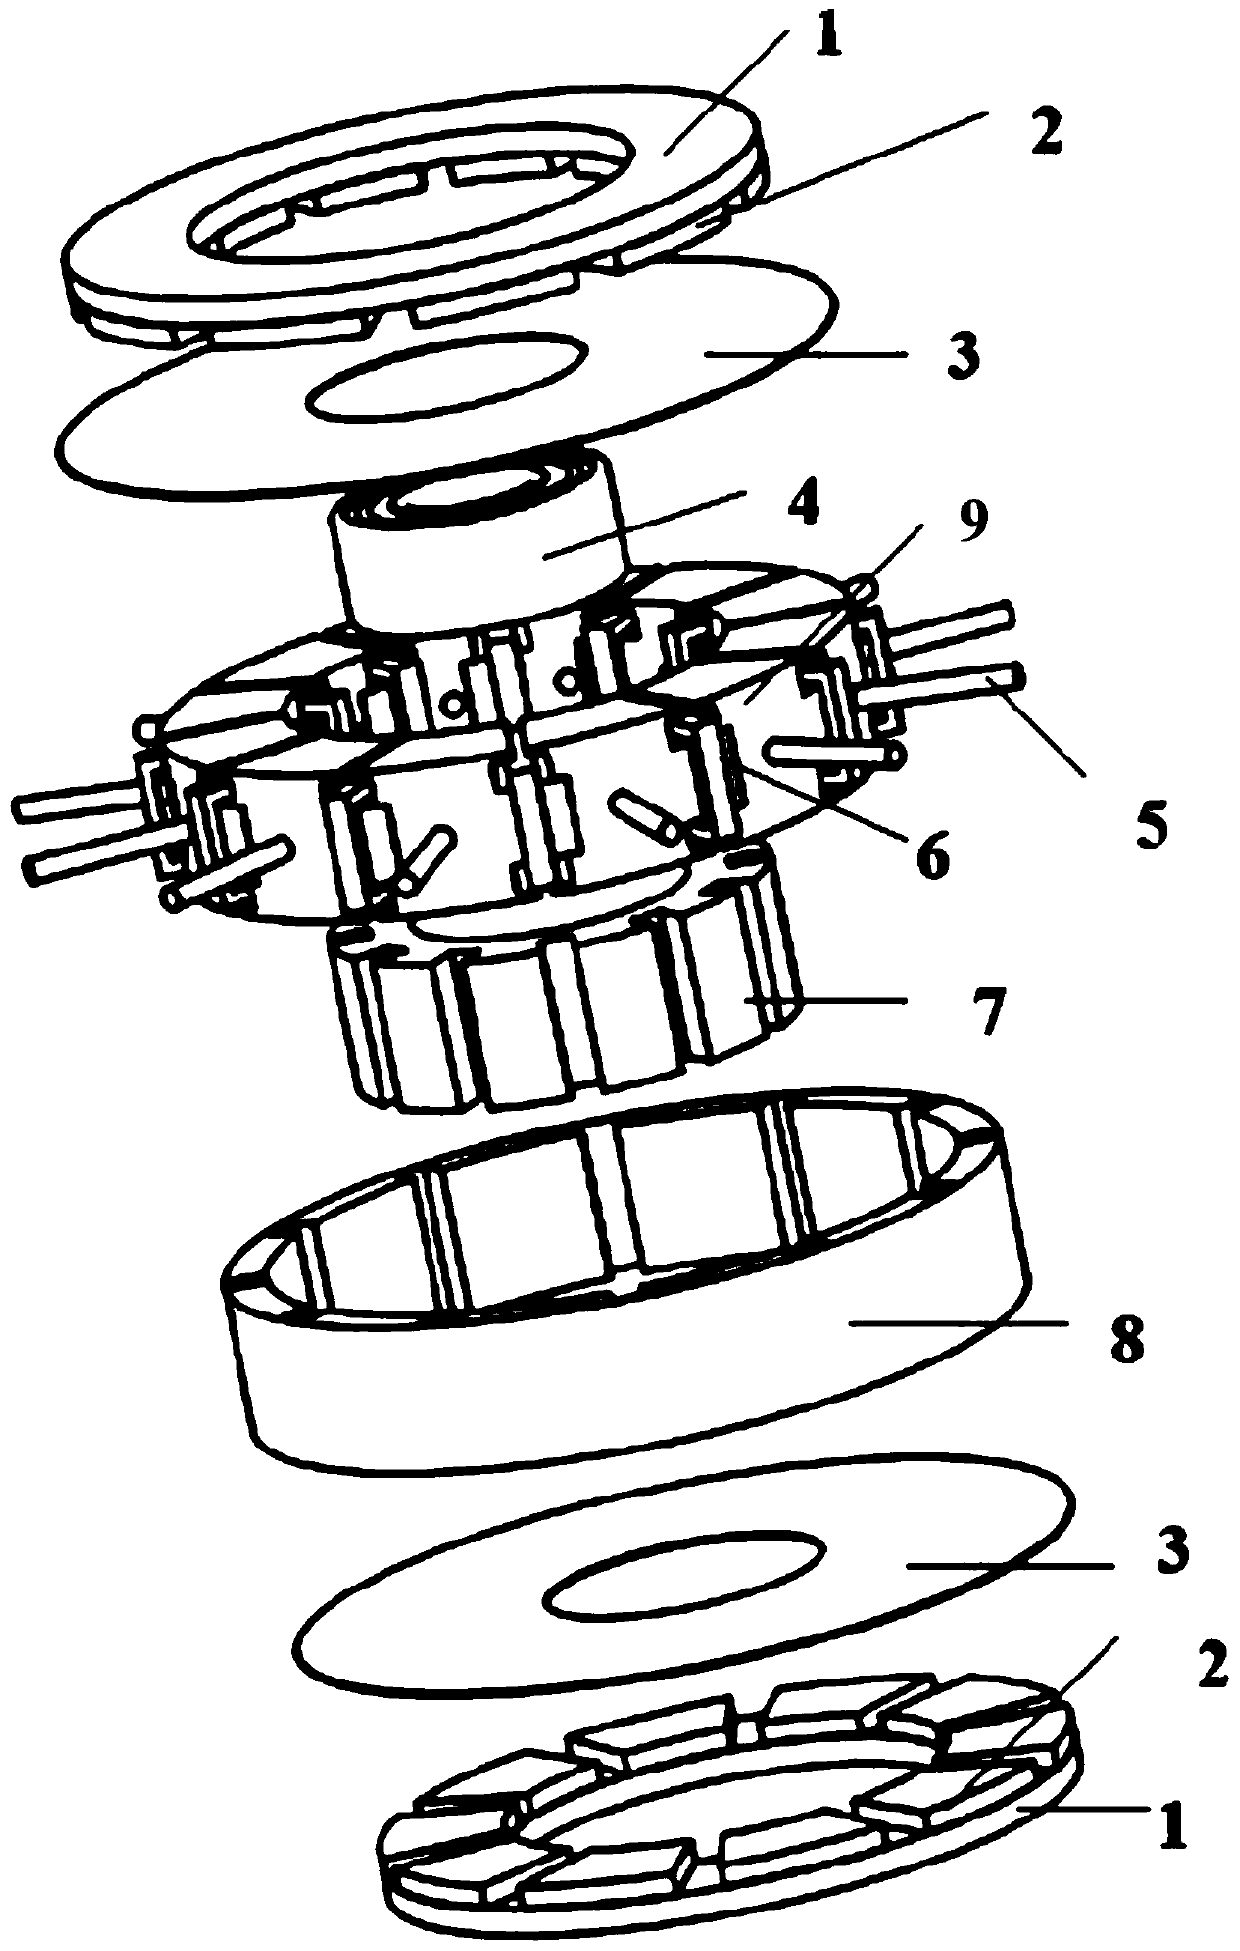 Modular axial flux permanent magnet motor